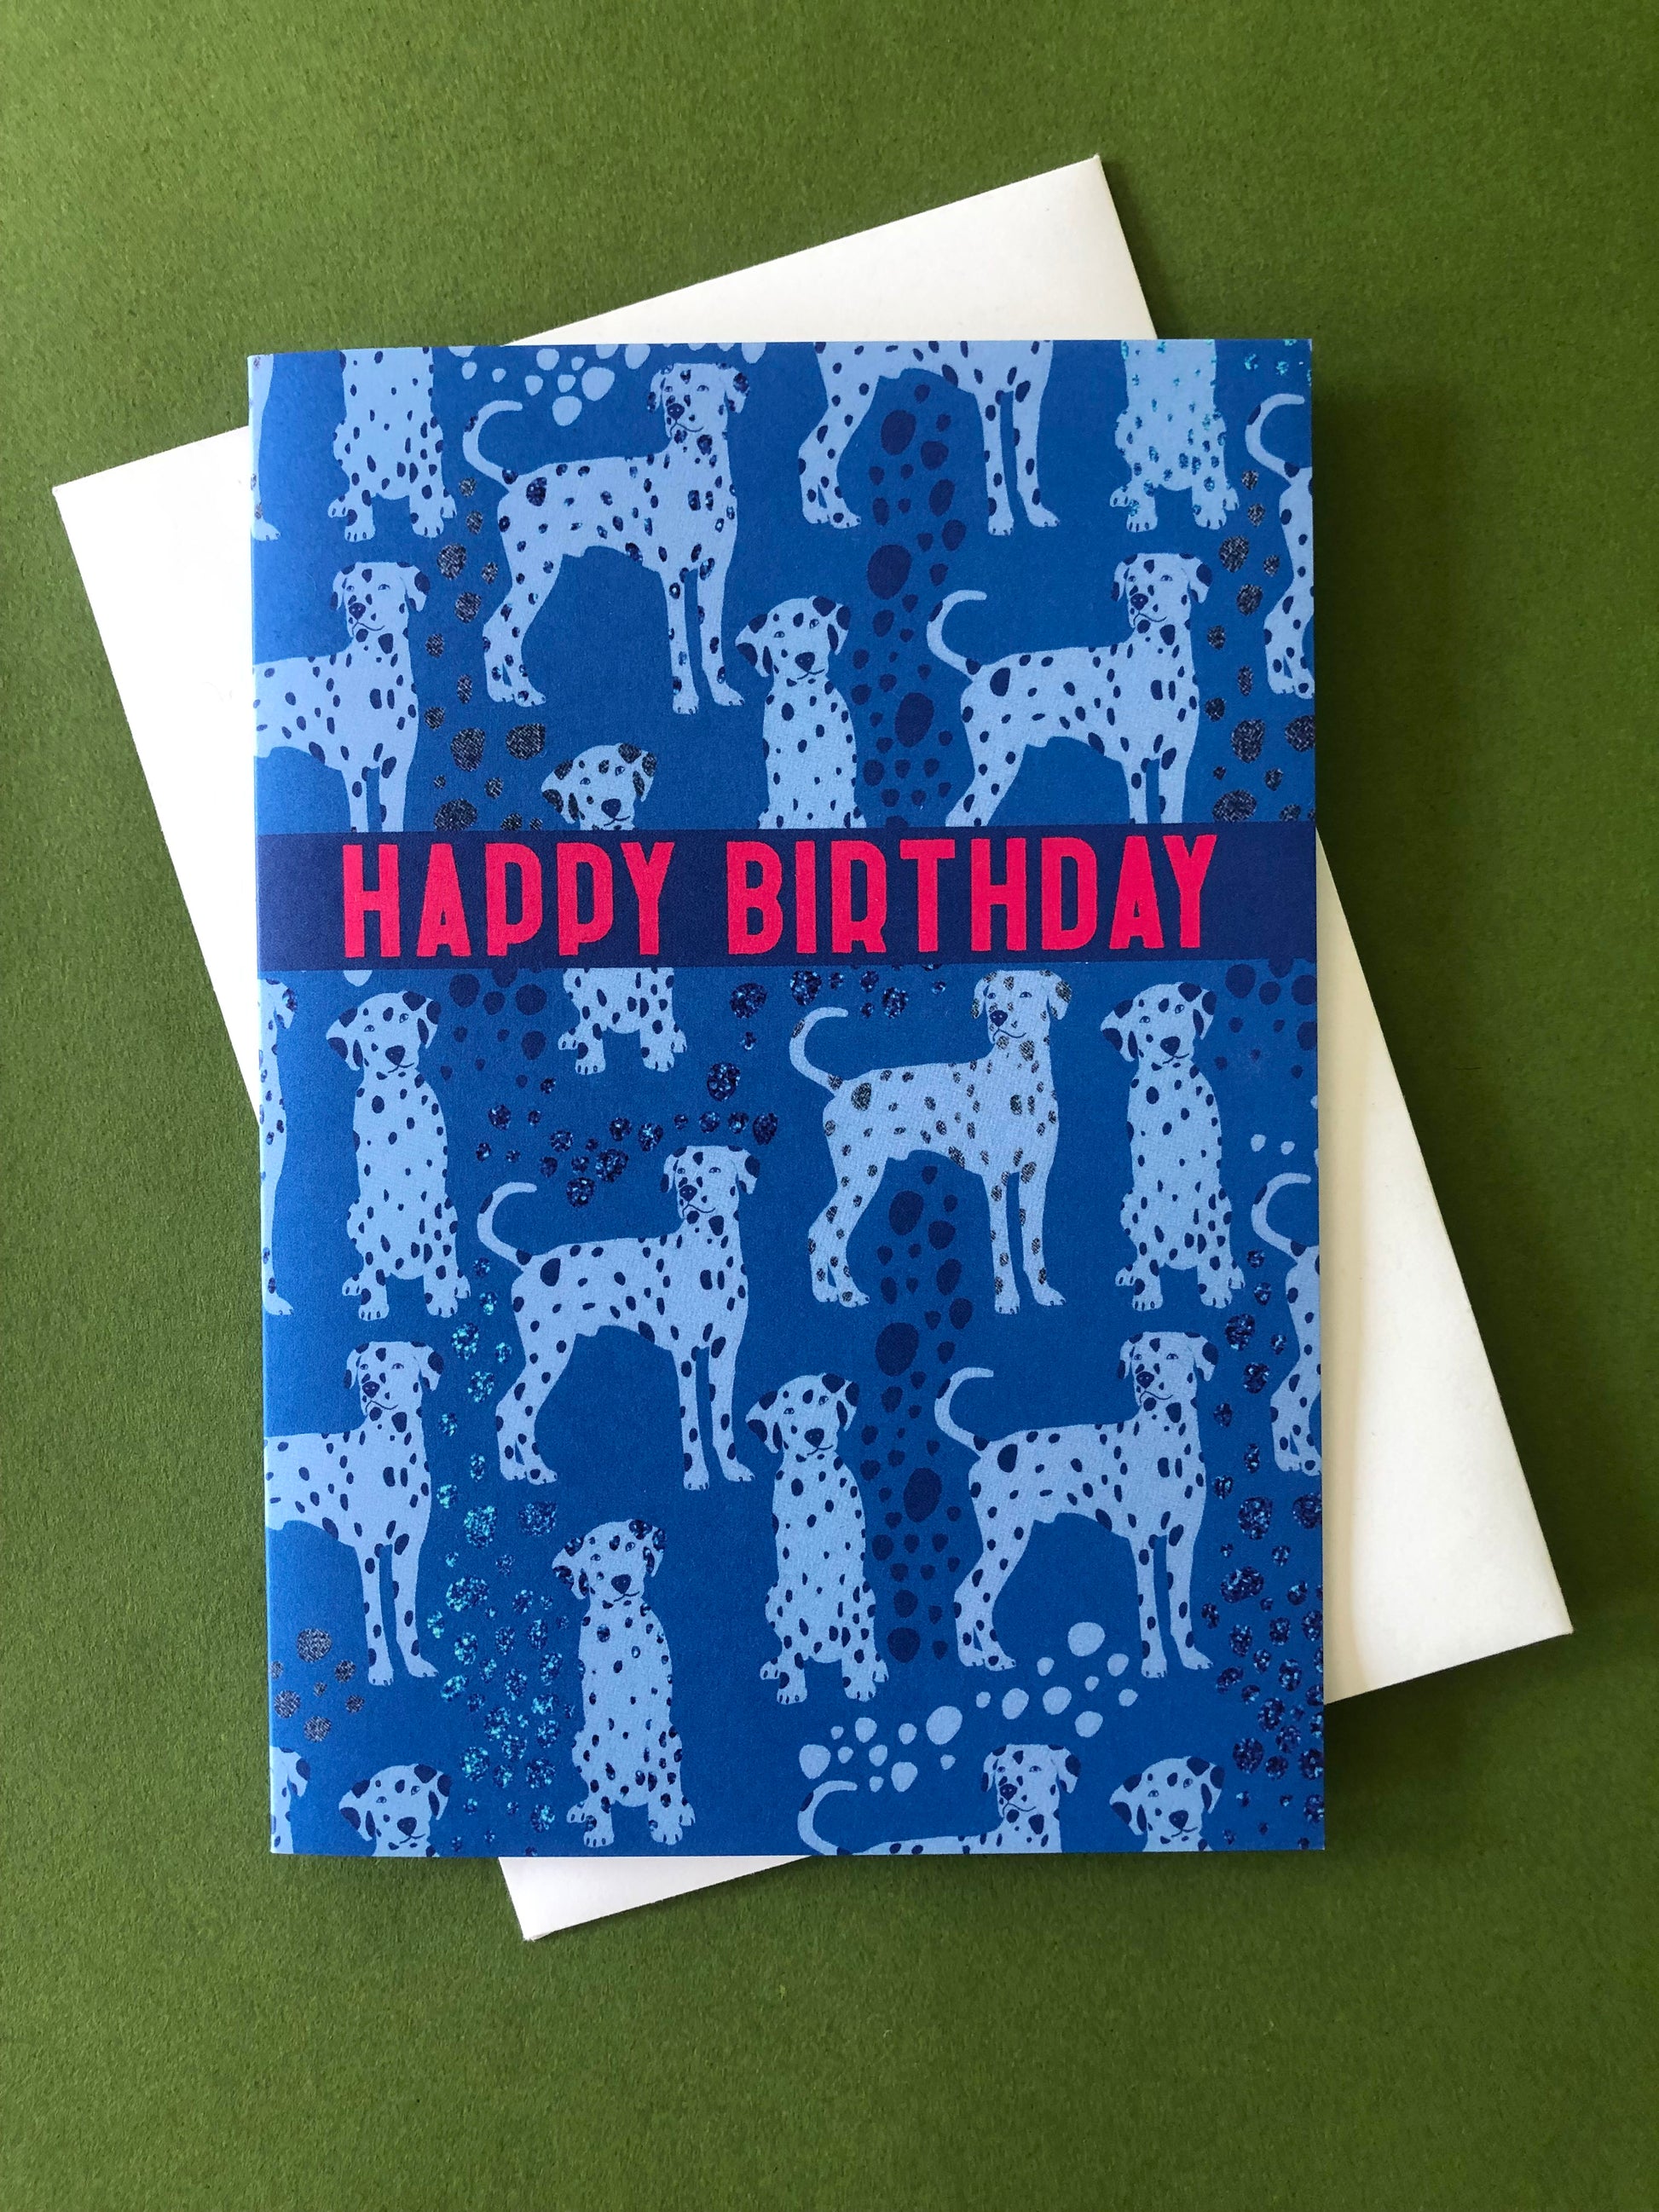 Blue Dalmatian print birthday card featuring a cute dog design on a green background.